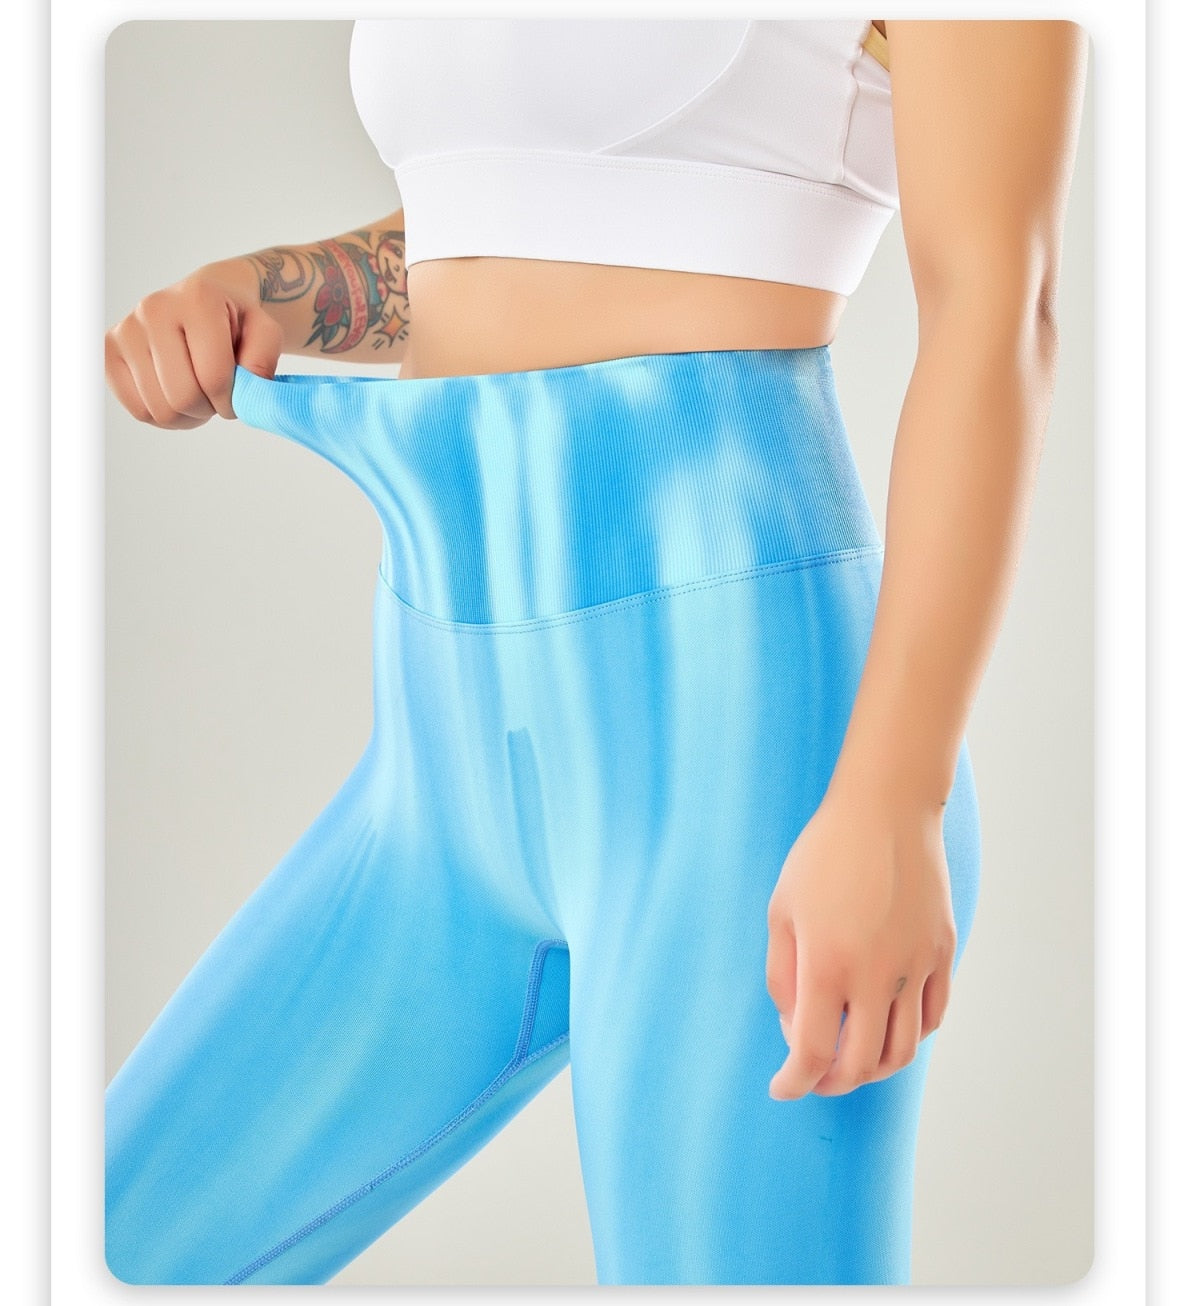 Tie-Dye Aurora Seamless Pants Peach Hip Seamless Women Fitness Leggings High-Waist Breathable Tight Yoga Sports Pants   58.99 EZYSELLA SHOP